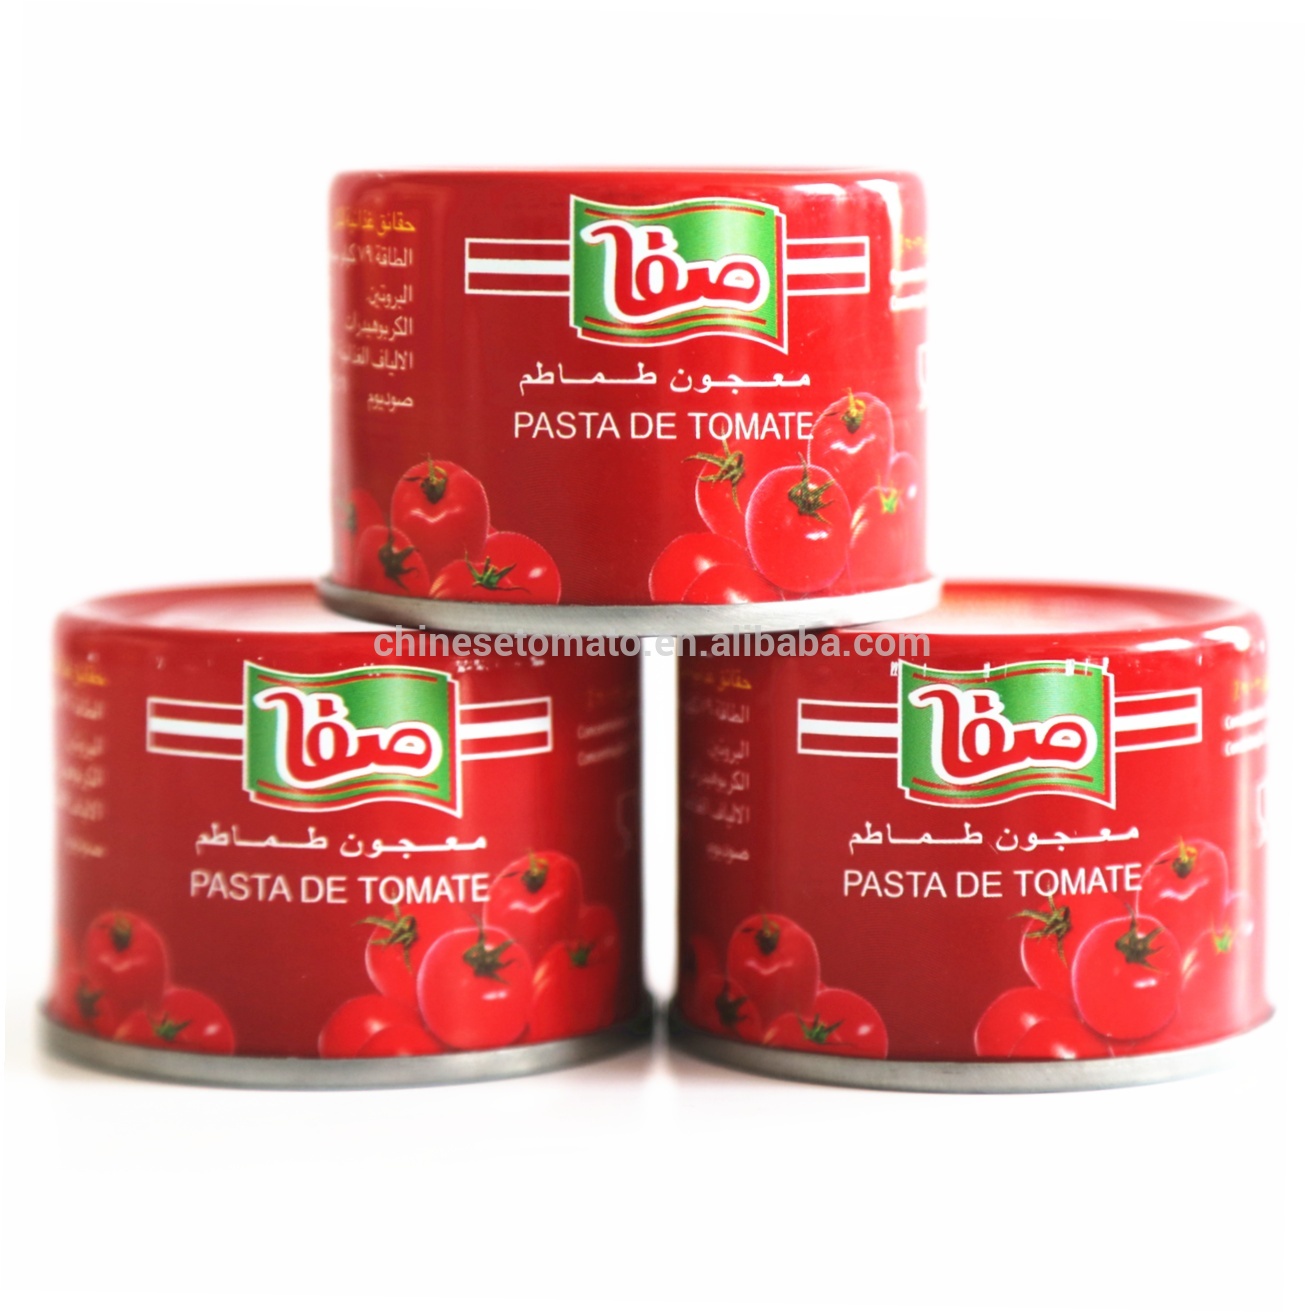 pasta de tomate marca safa 2,2kg en conserva